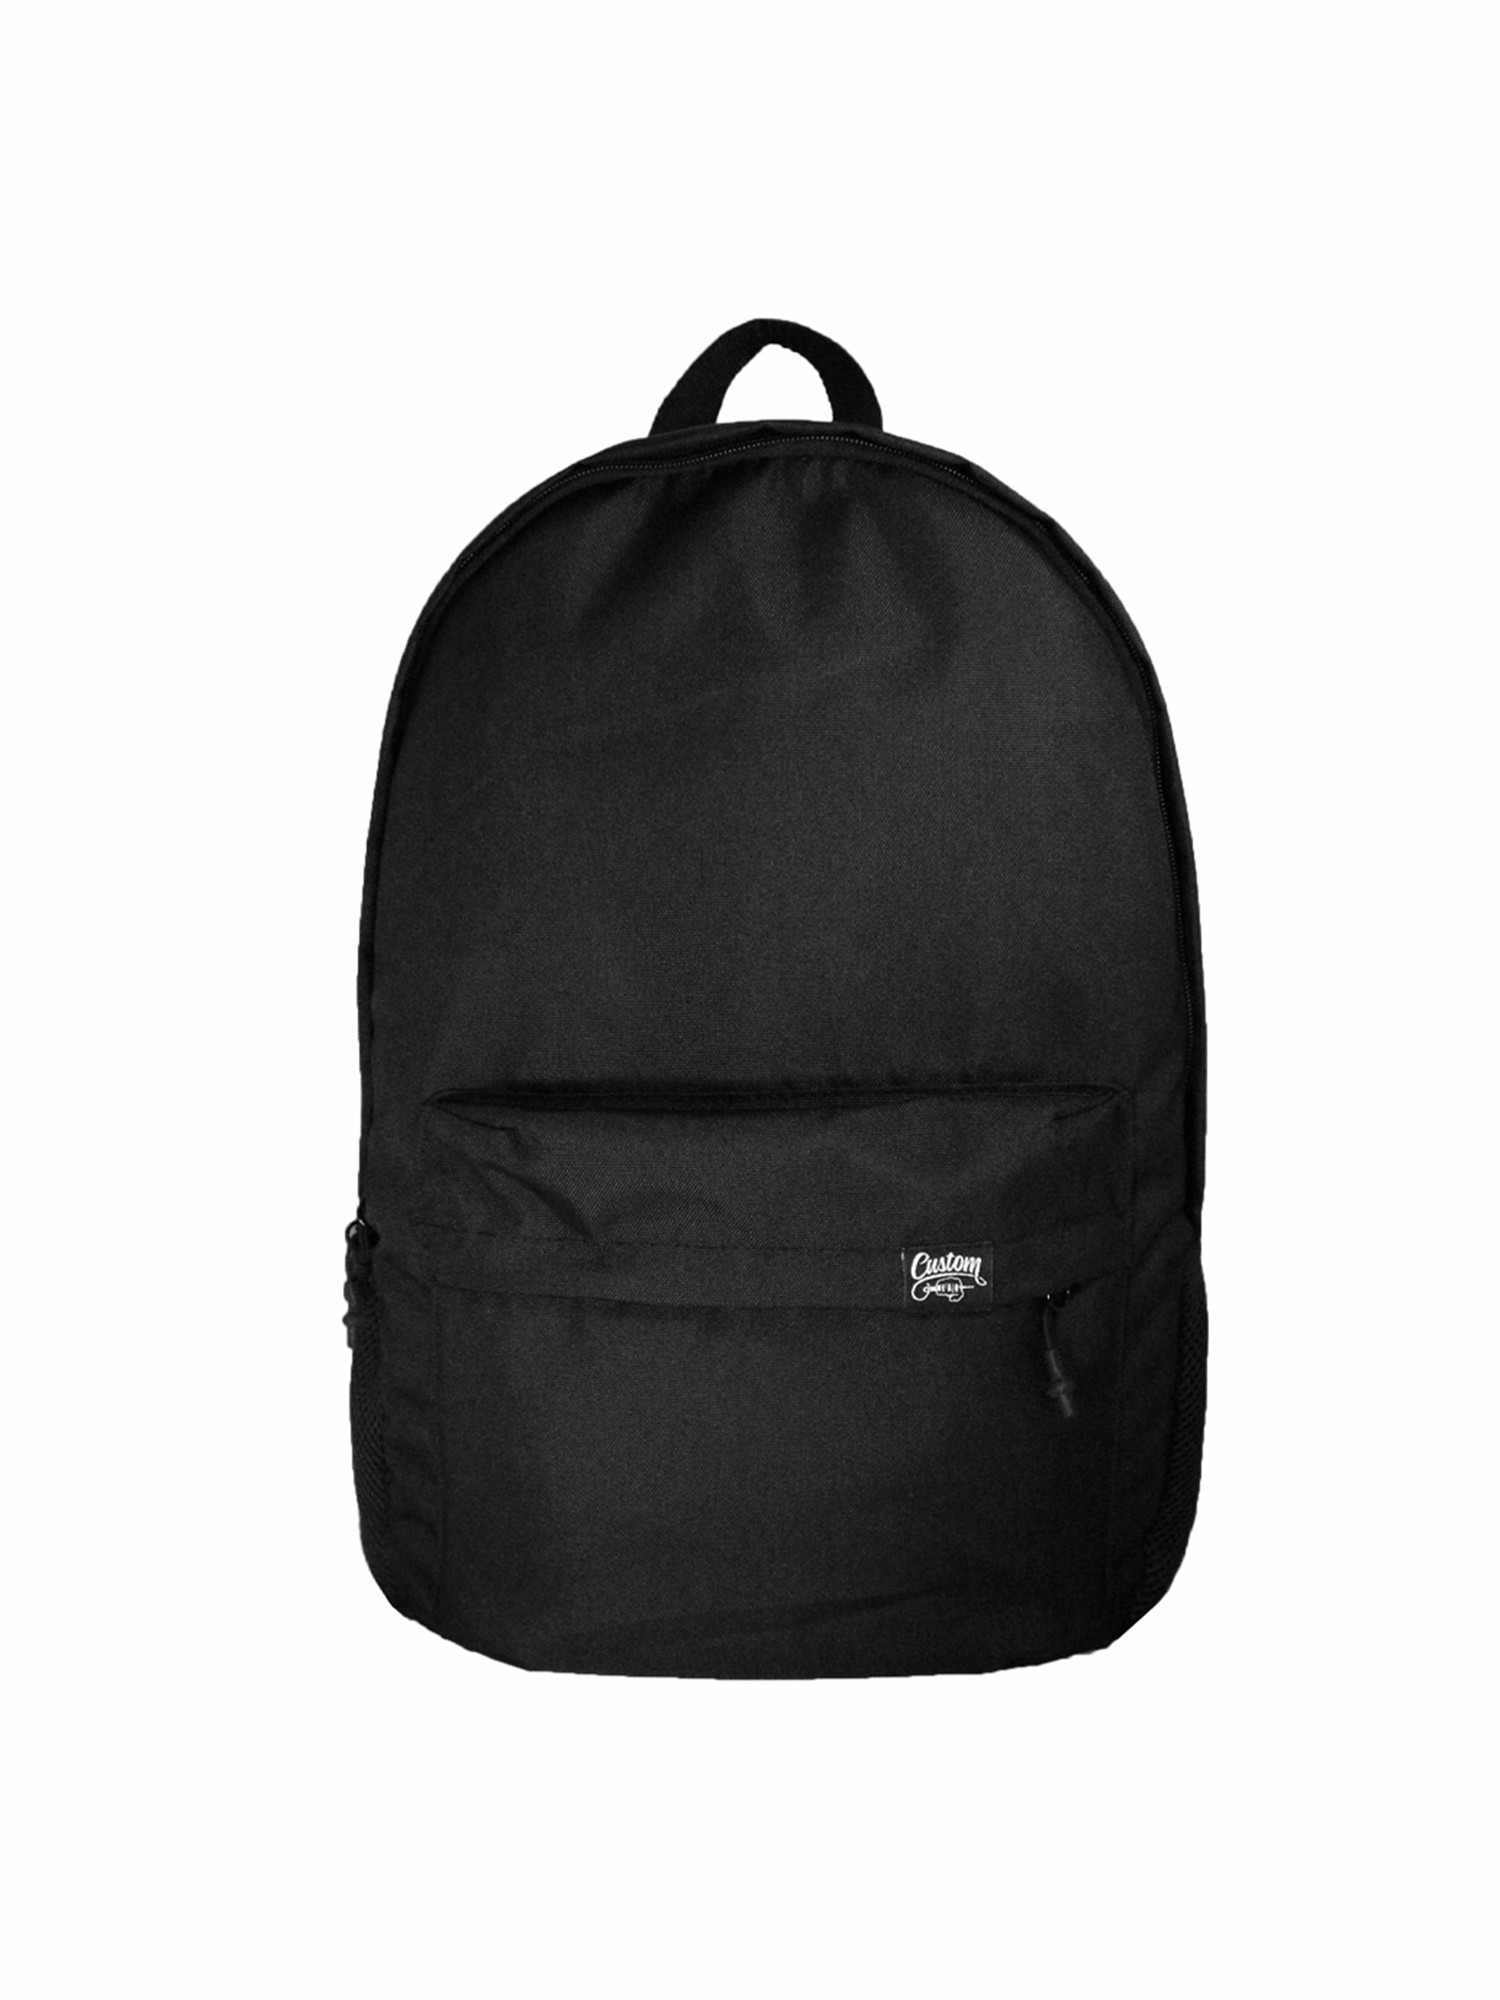 Backpack Duo 2.0 Black Custom Wear